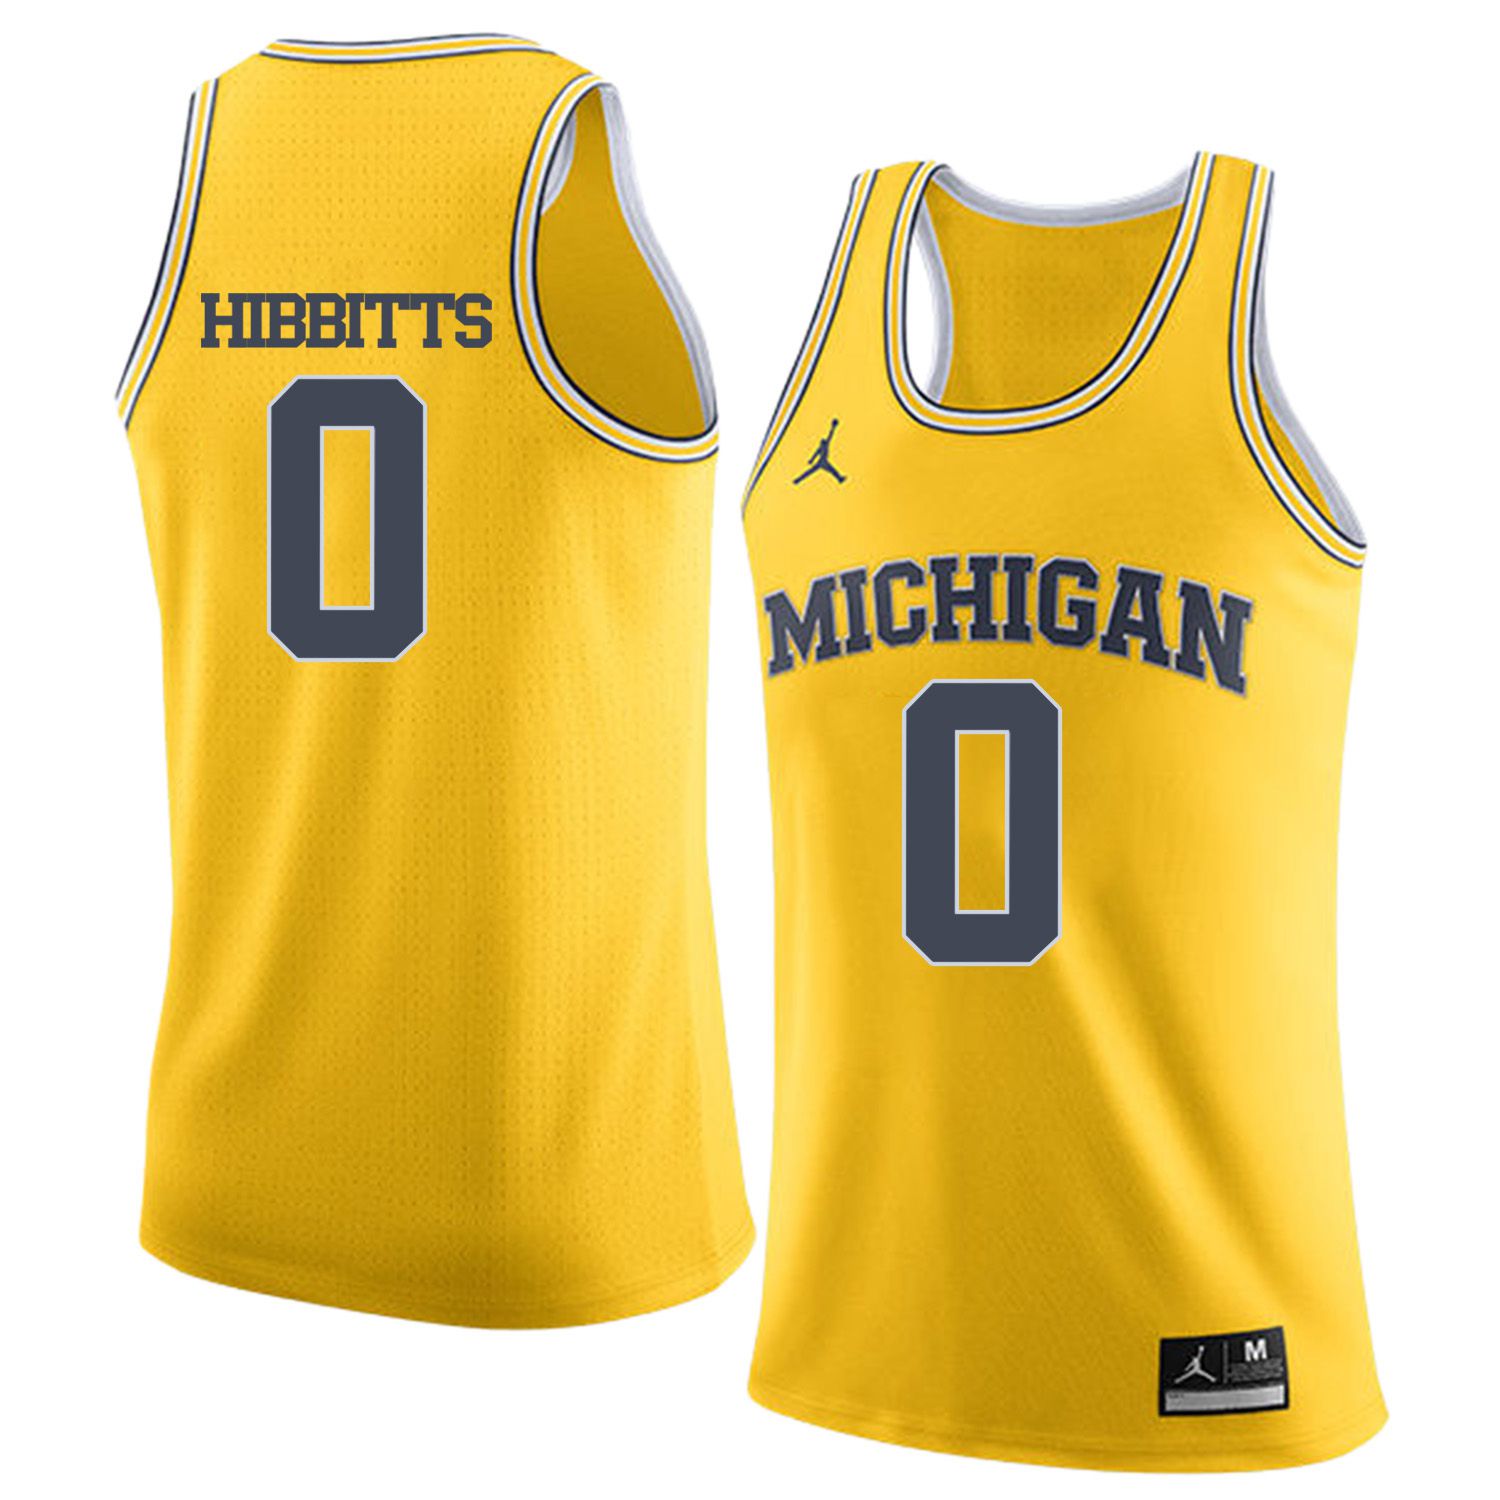 Men Jordan University of Michigan Basketball Yellow 0 Hibbitts Customized NCAA Jerseys